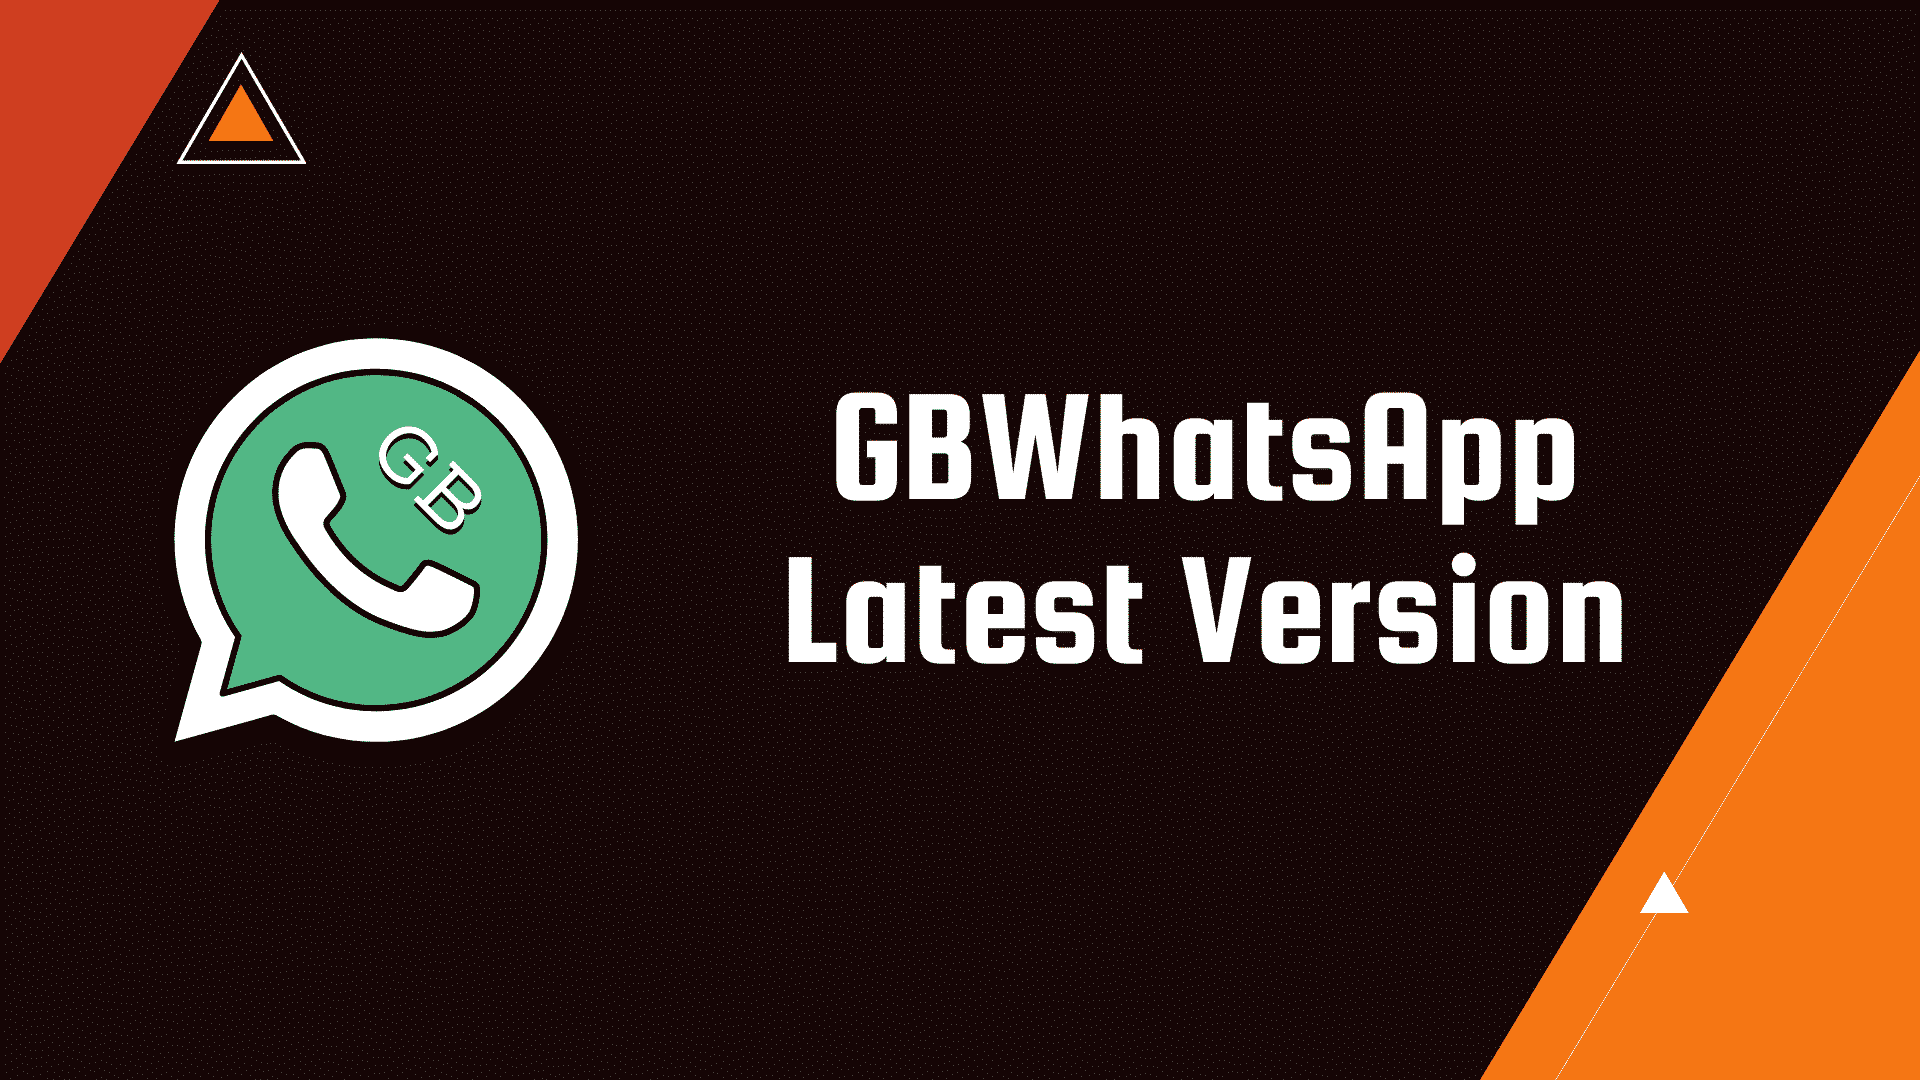 gbwhatsapp pro 8.60 download